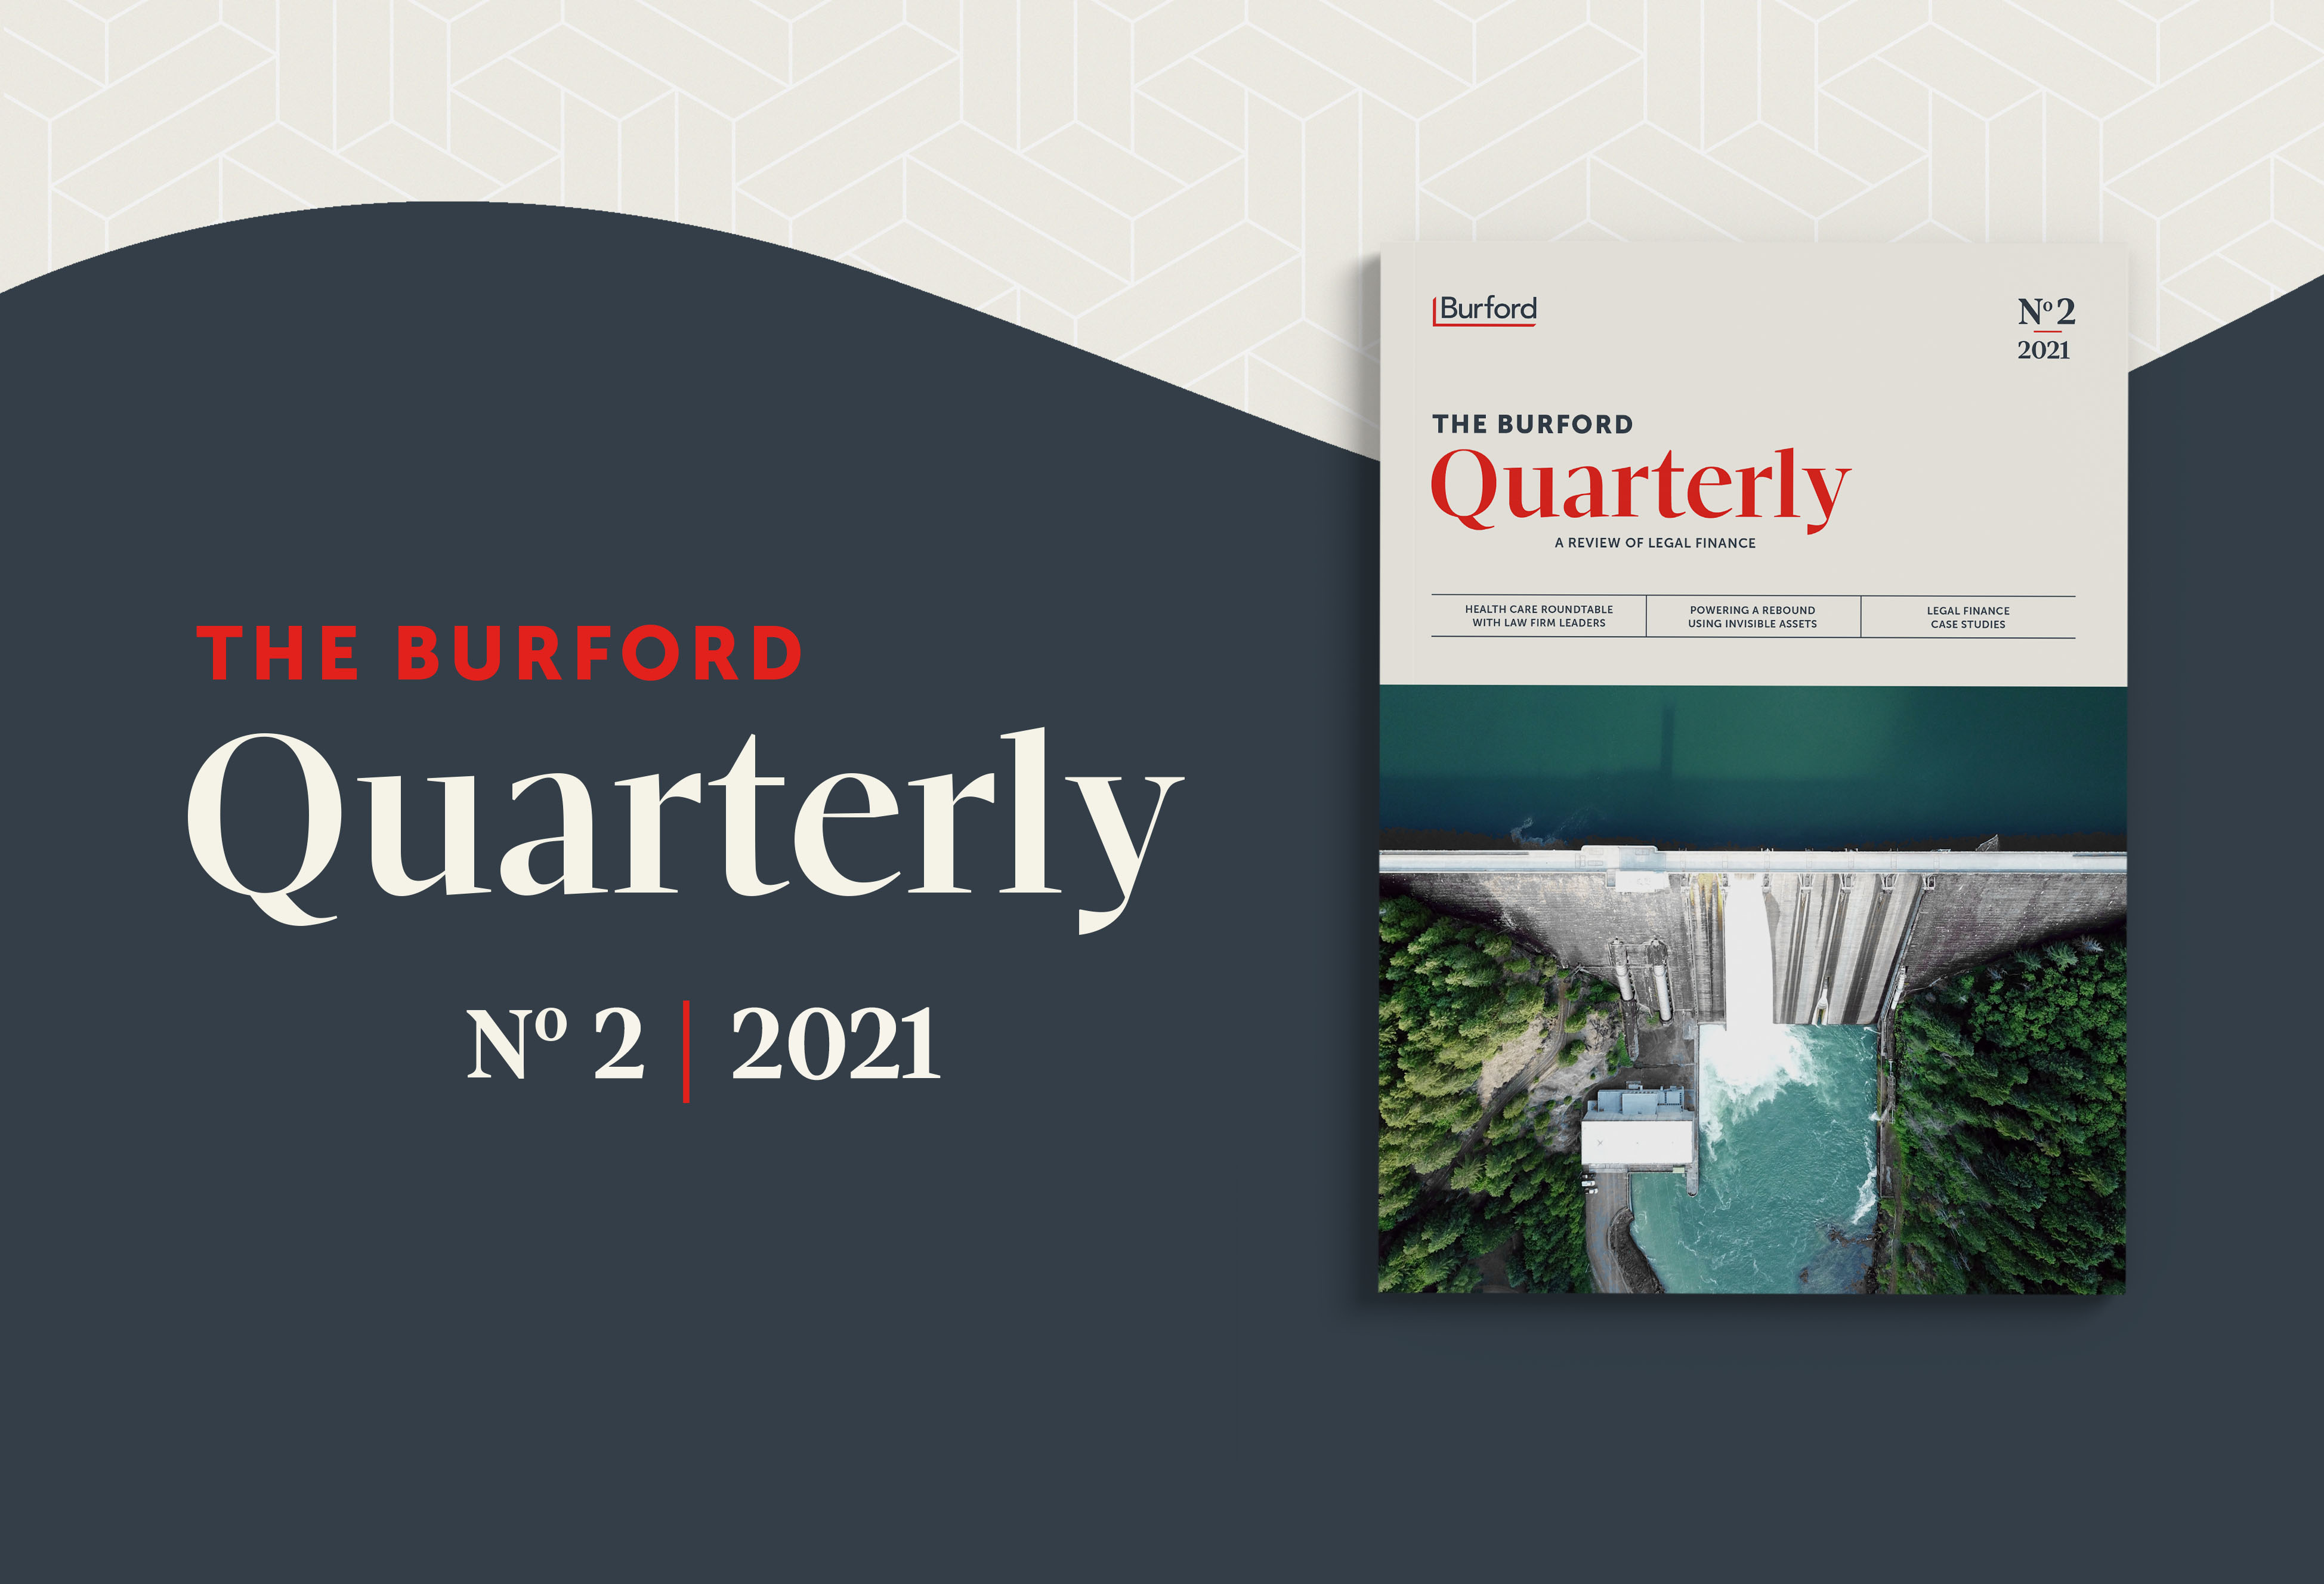 Quarterly No 2 2021 Website Thumbnail (New Aspect Ratio)